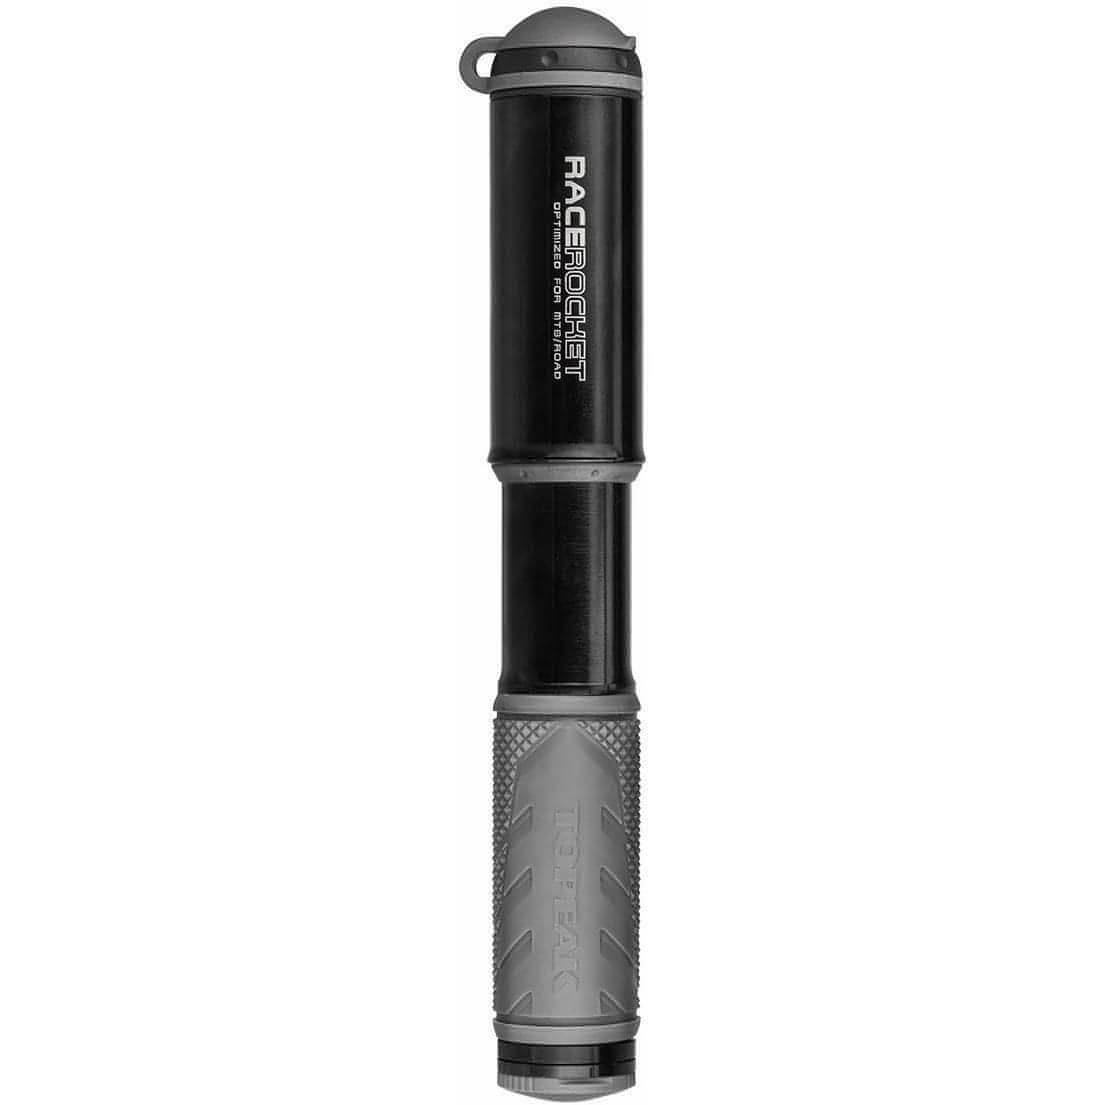 Topeak Race Rocket Mini Hand Pump - Black 4710069689066 - Start Fitness